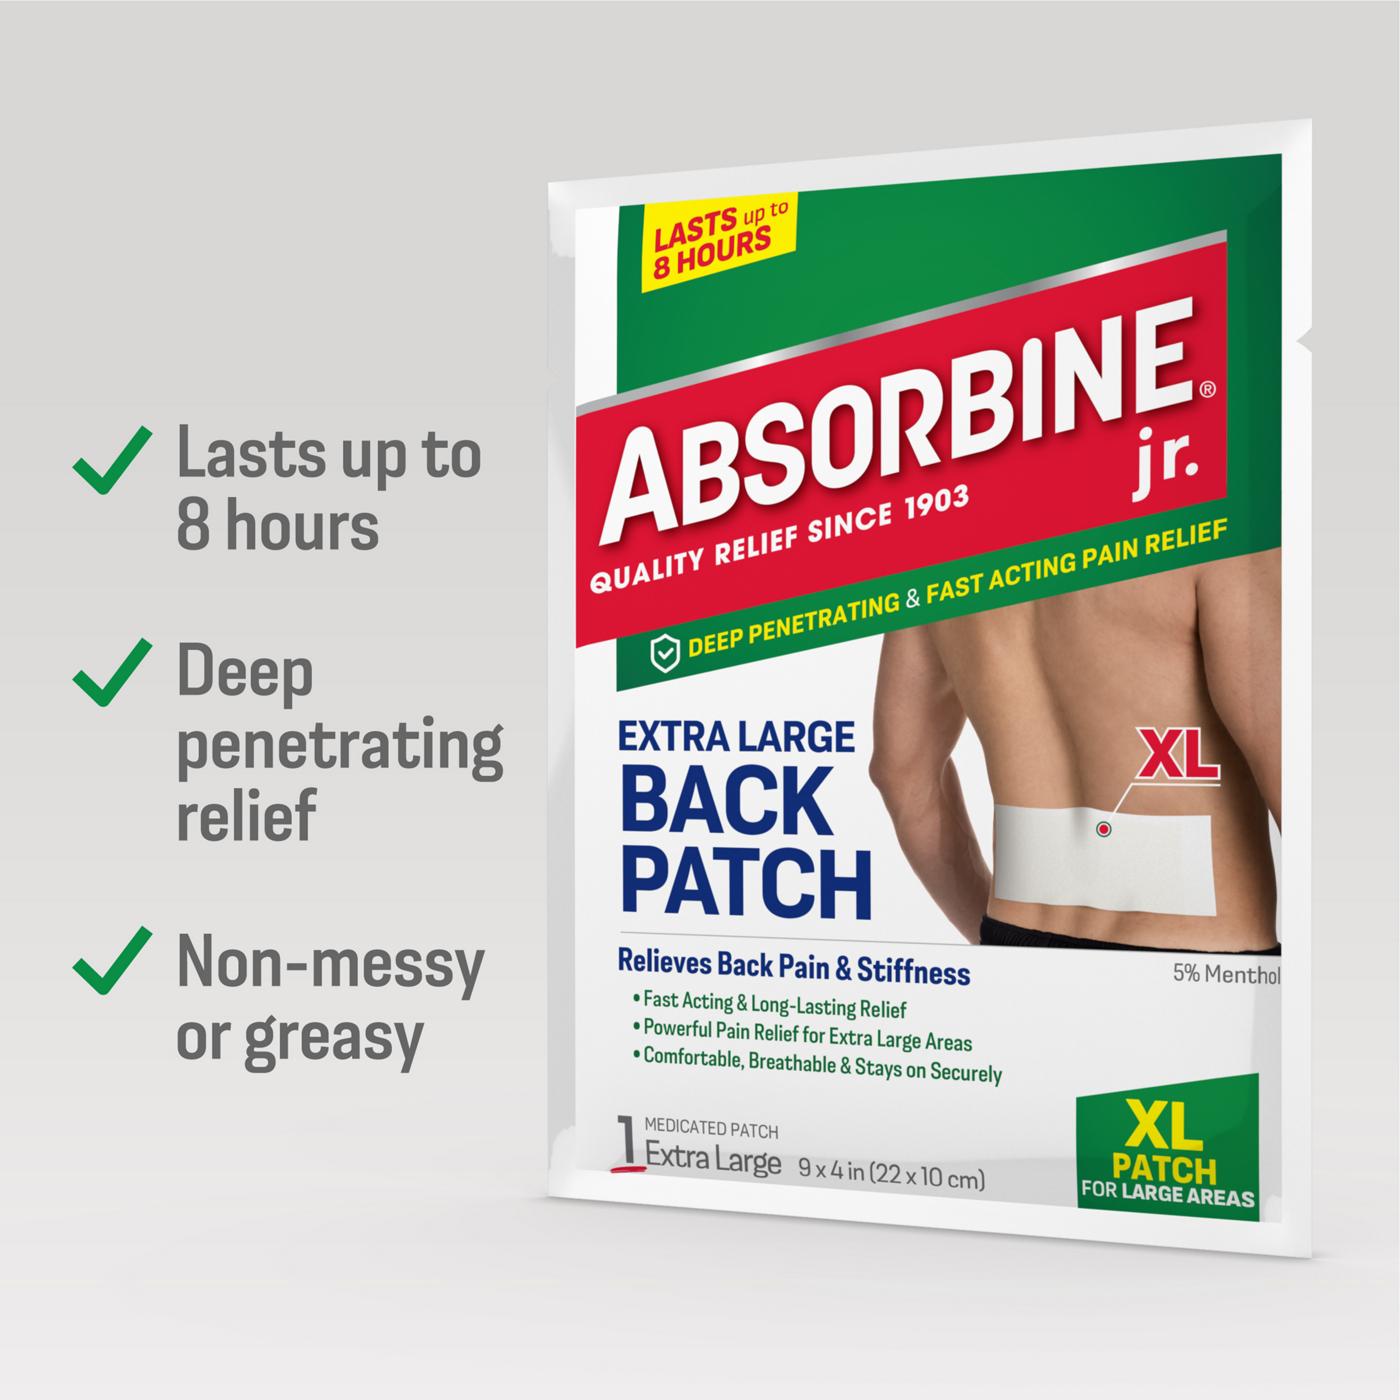 Absorbine Jr. Plus Pain Relief Back Patch XL; image 2 of 2